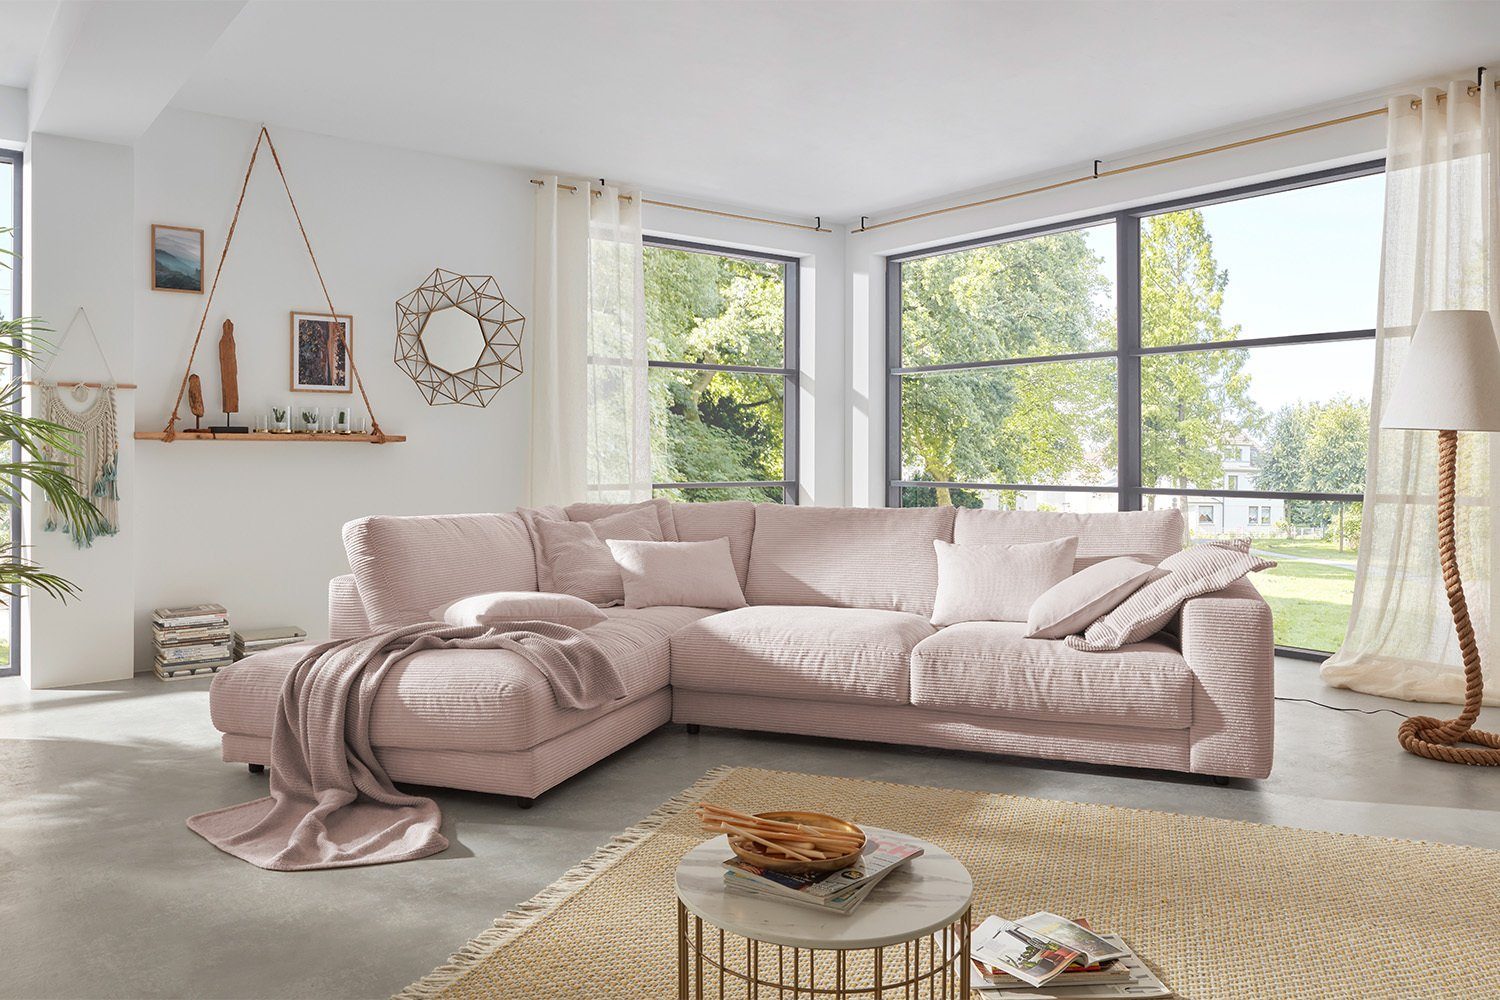 KAWOLA Ecksofa MADELINE, links, rechts rosa Cord, versch. Farben od. Recamiere Sofa